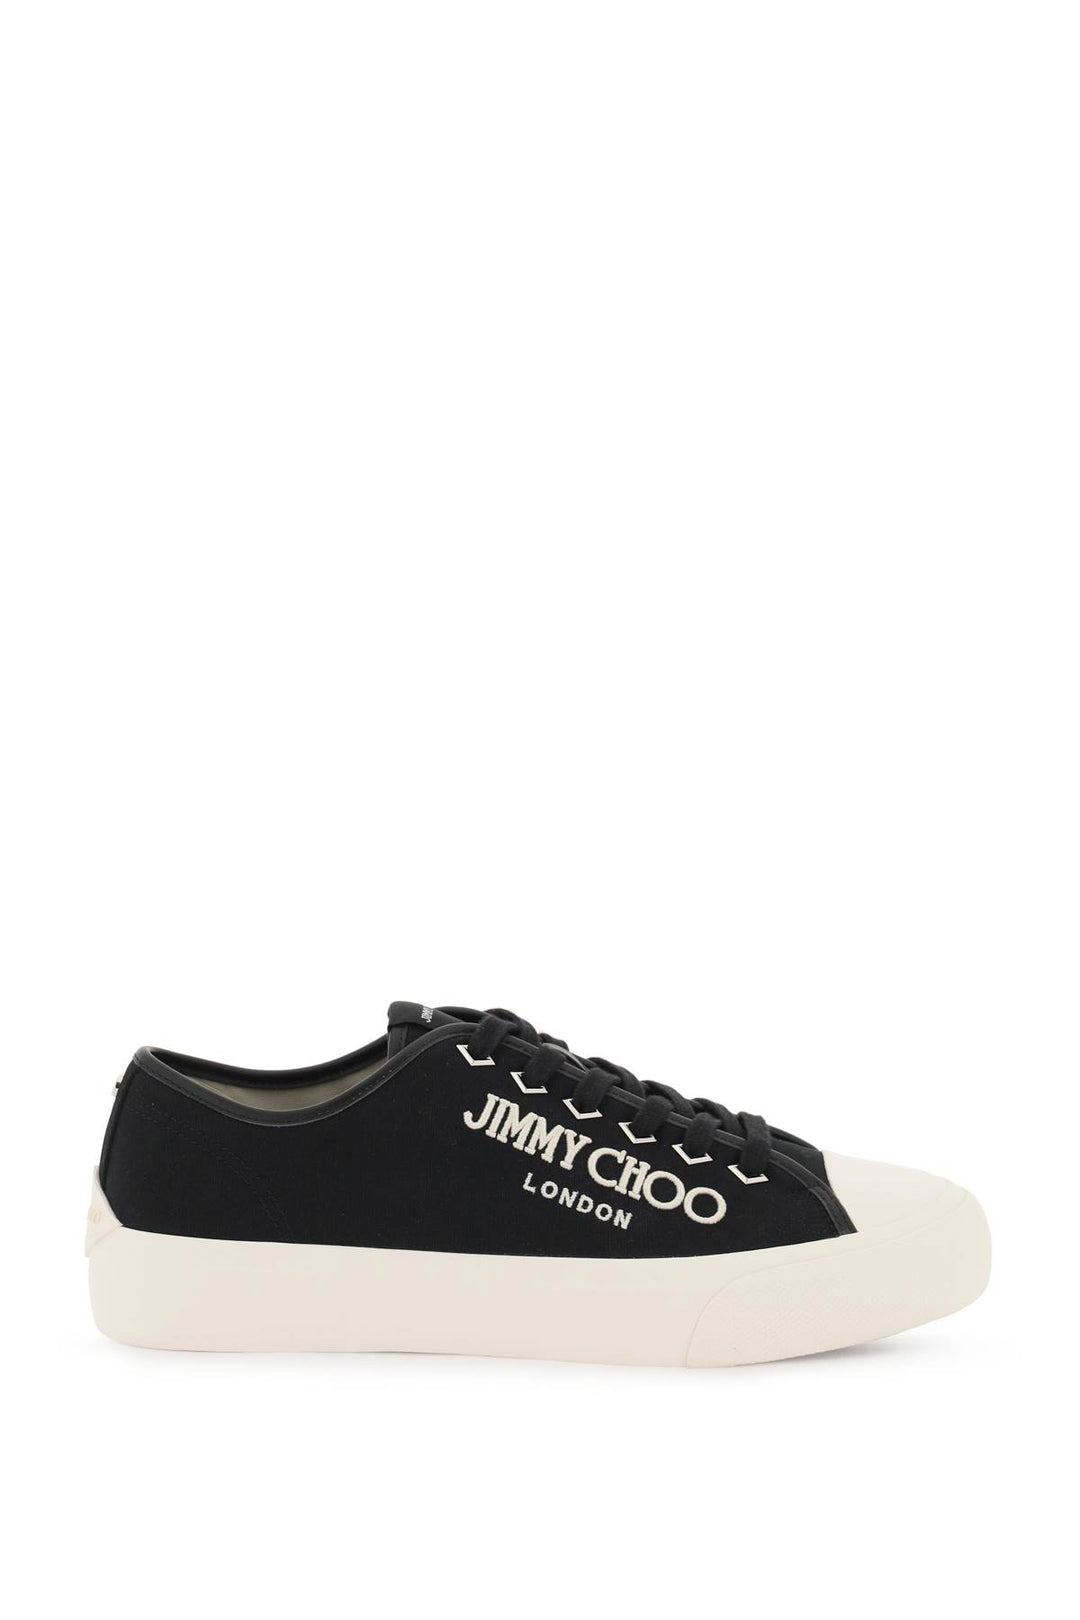 Jimmy Choo Palma M Sneakers   Nero